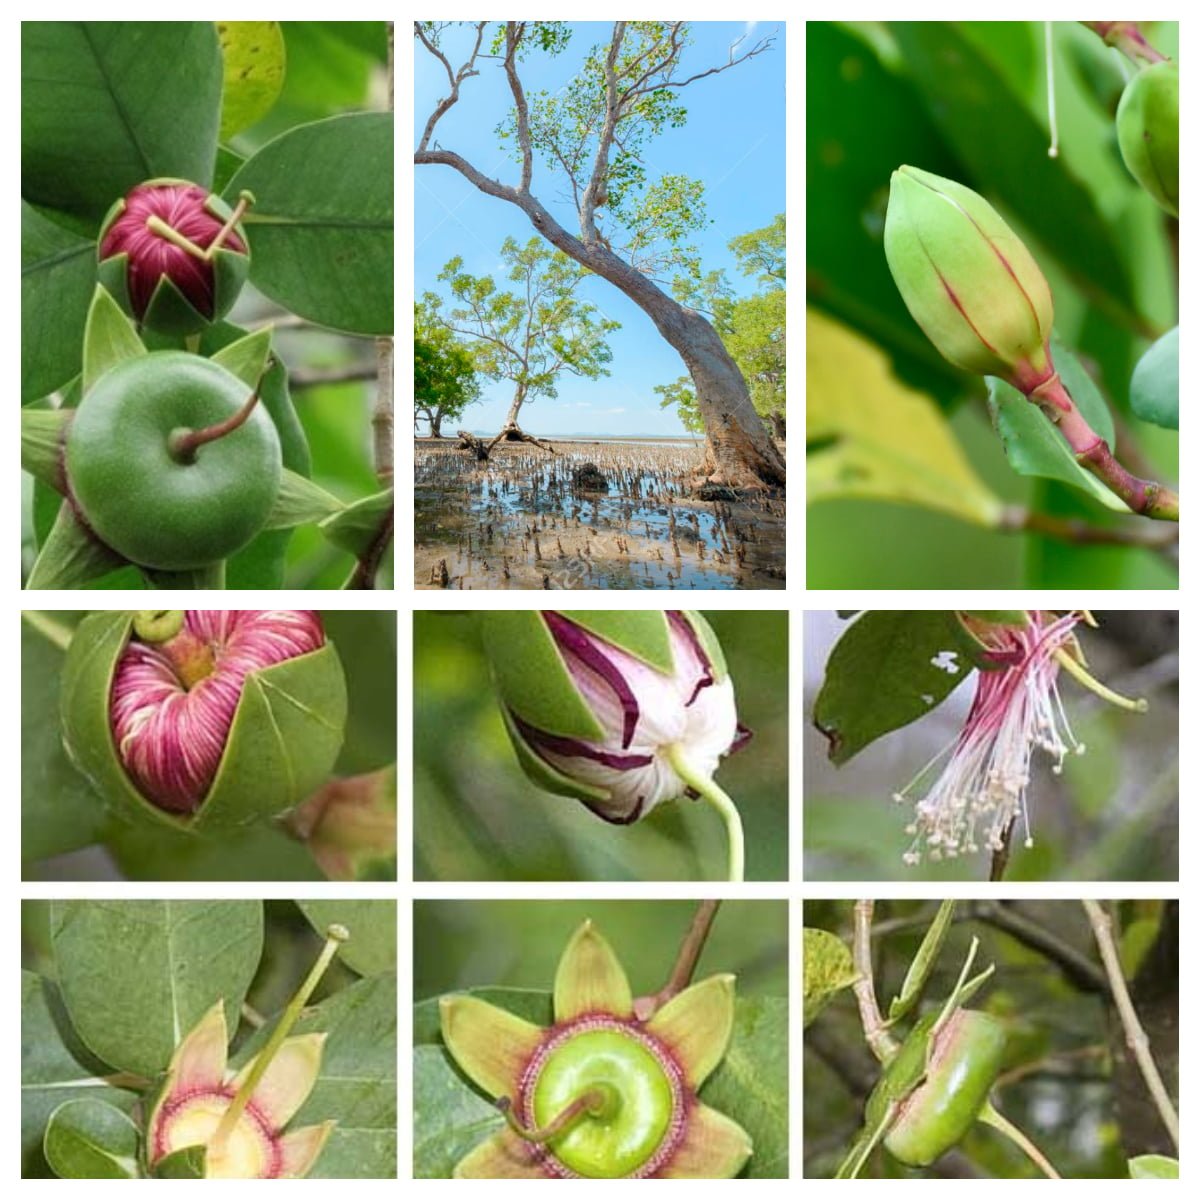 Cây Bần Chua (Bần Sẻ, Mangrove Apple, Sonneratia caseolaris)